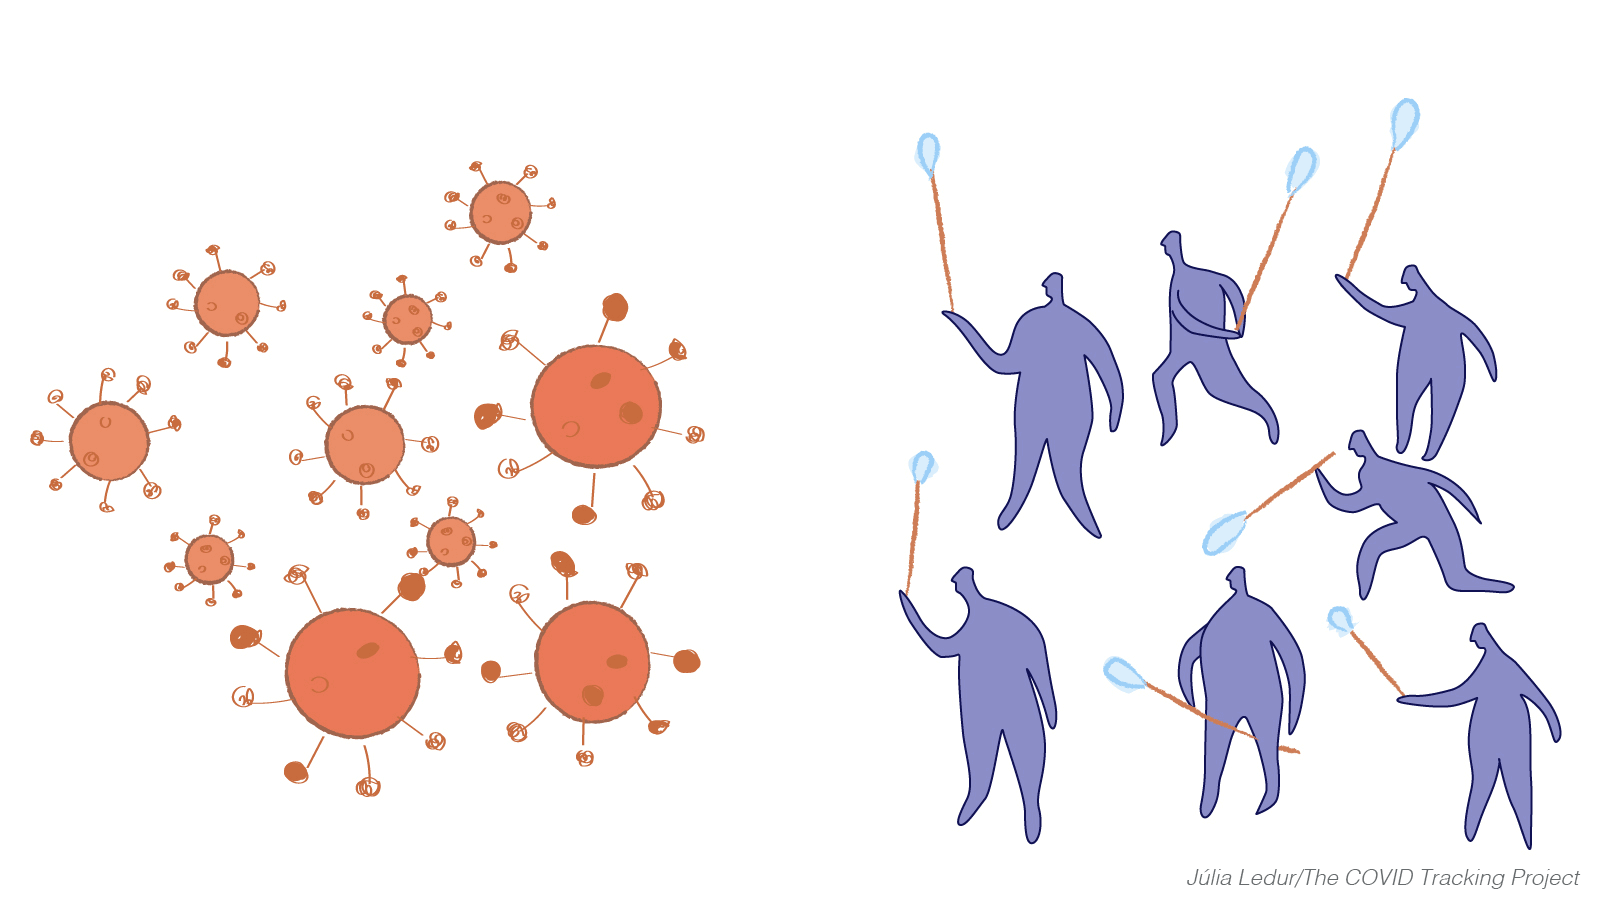 An animated battle between drawings of people bearing testing swabs and drawings of the SARS-CoV-2 virus